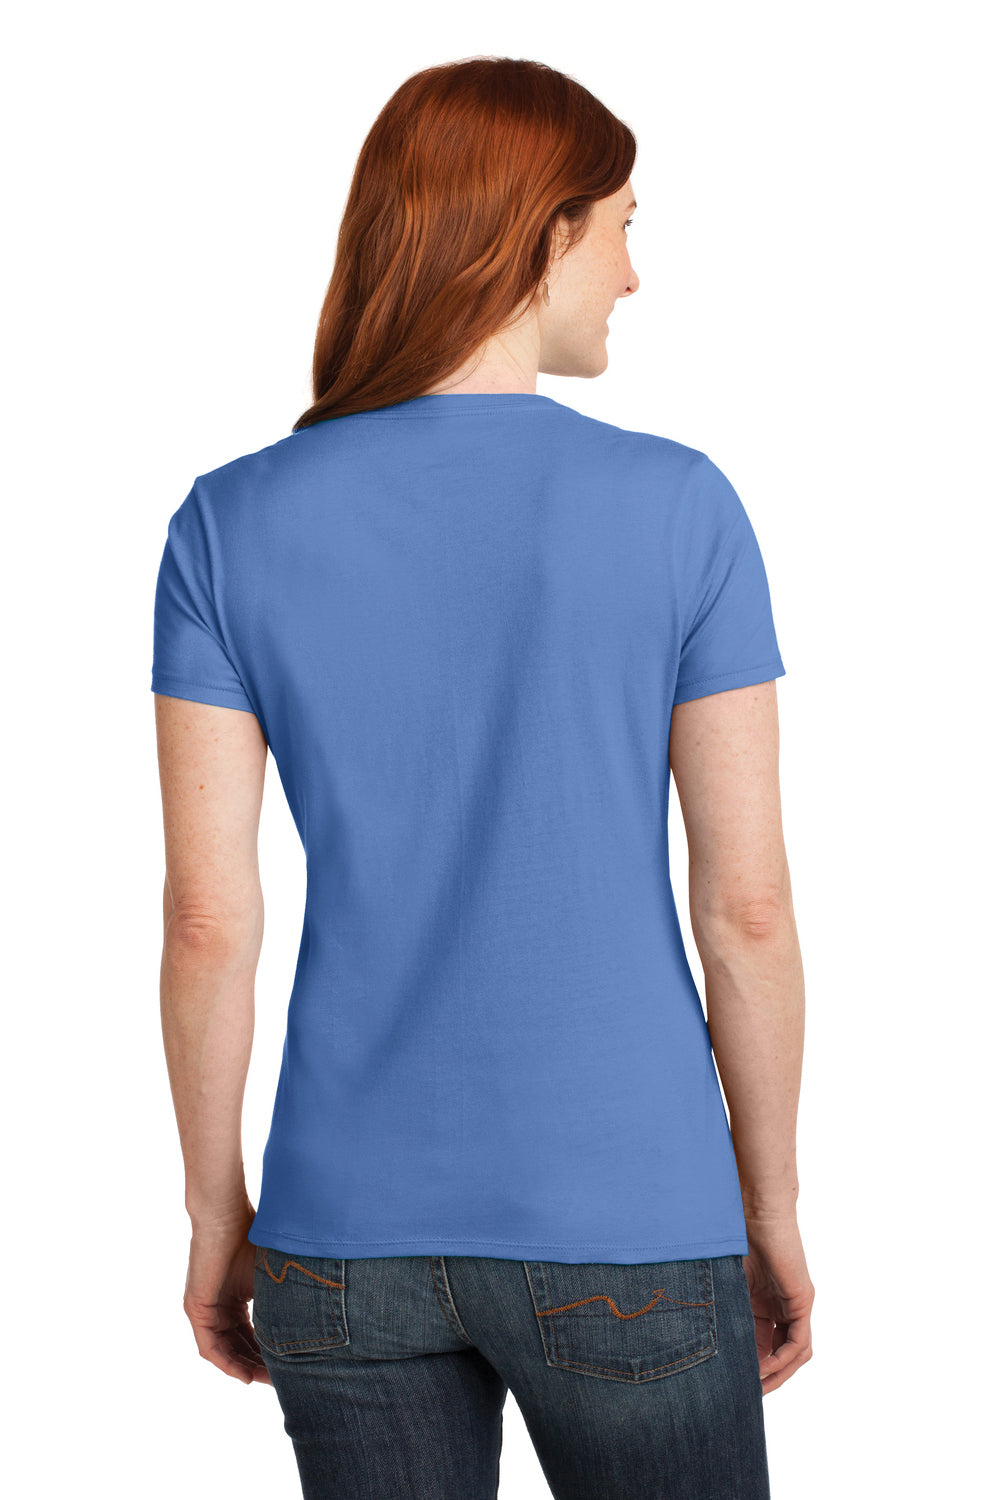 Hanes S04V Womens Nano-T Short Sleeve V-Neck T-Shirt Vintage Blue Back